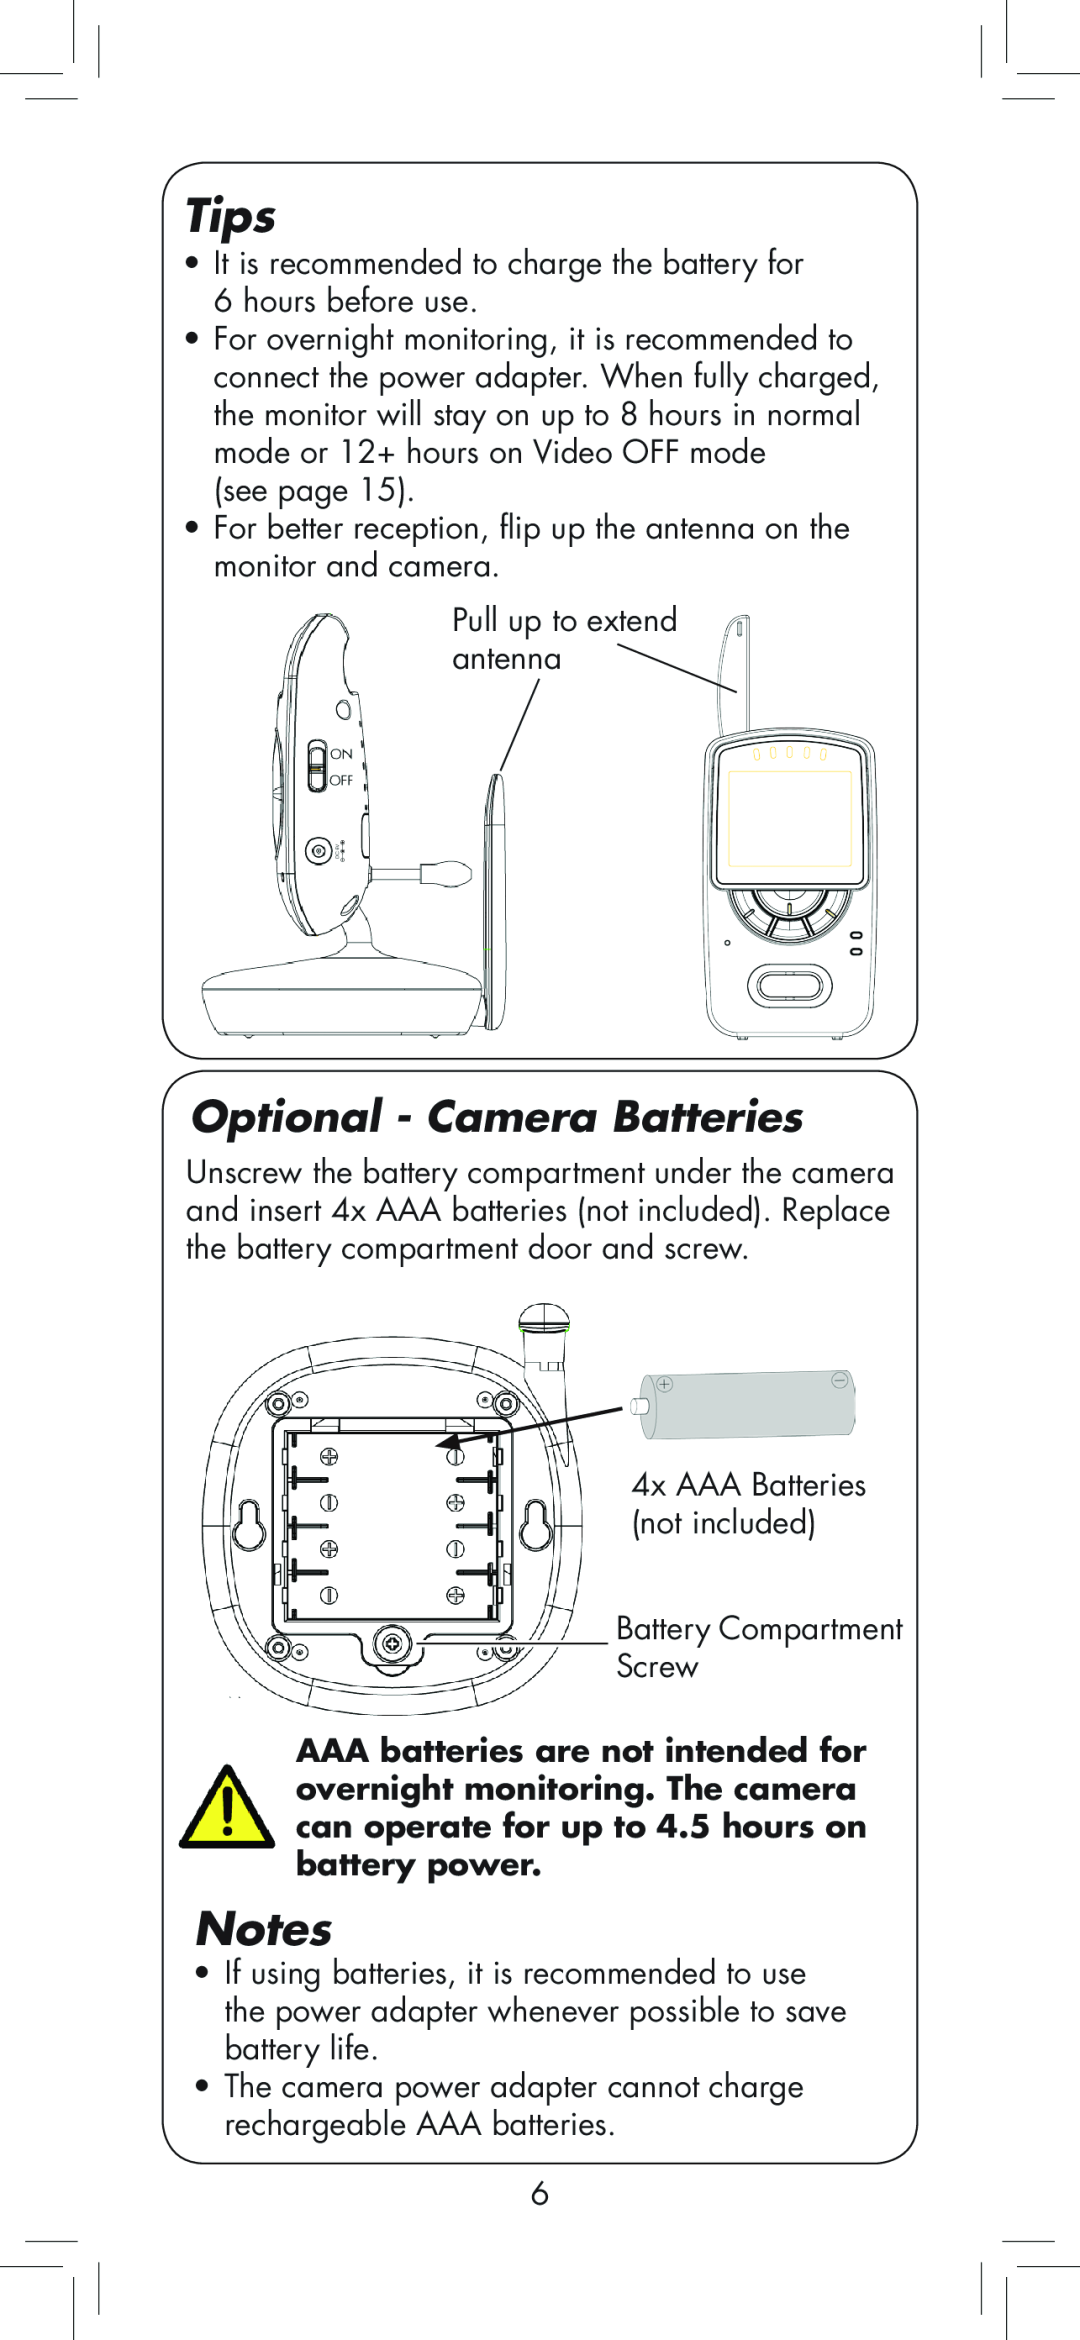 LOREX Technology BB2411 manual Tips, Notes, Optional - Camera Batteries 